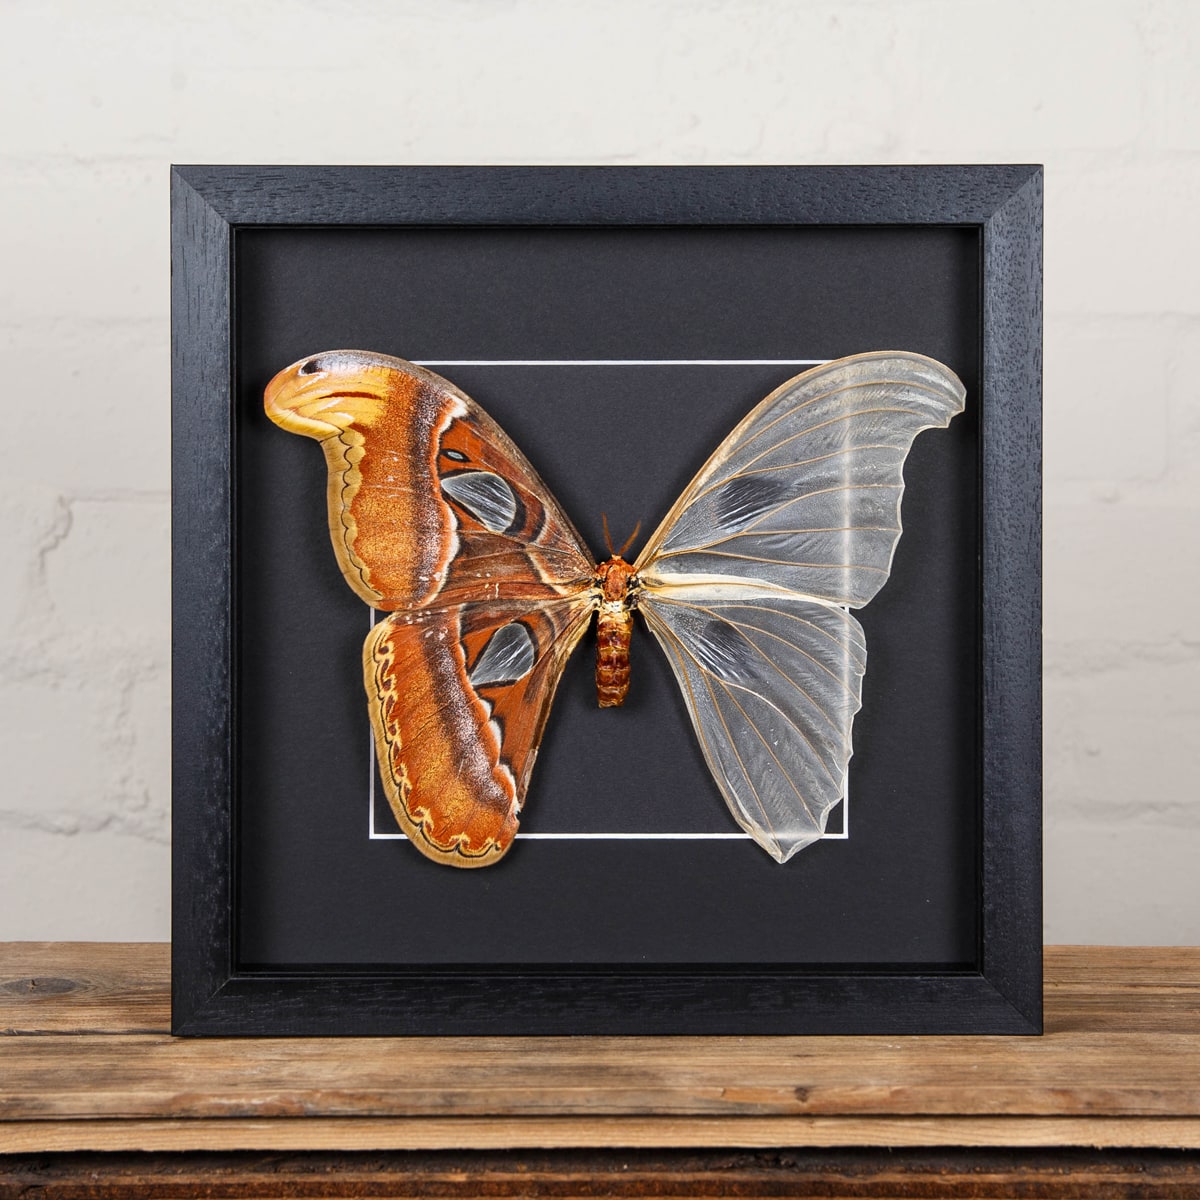 Minibeast Descaled Female Atlas Moth Anatomy Specimen in Box Frame (Attacus atlas)